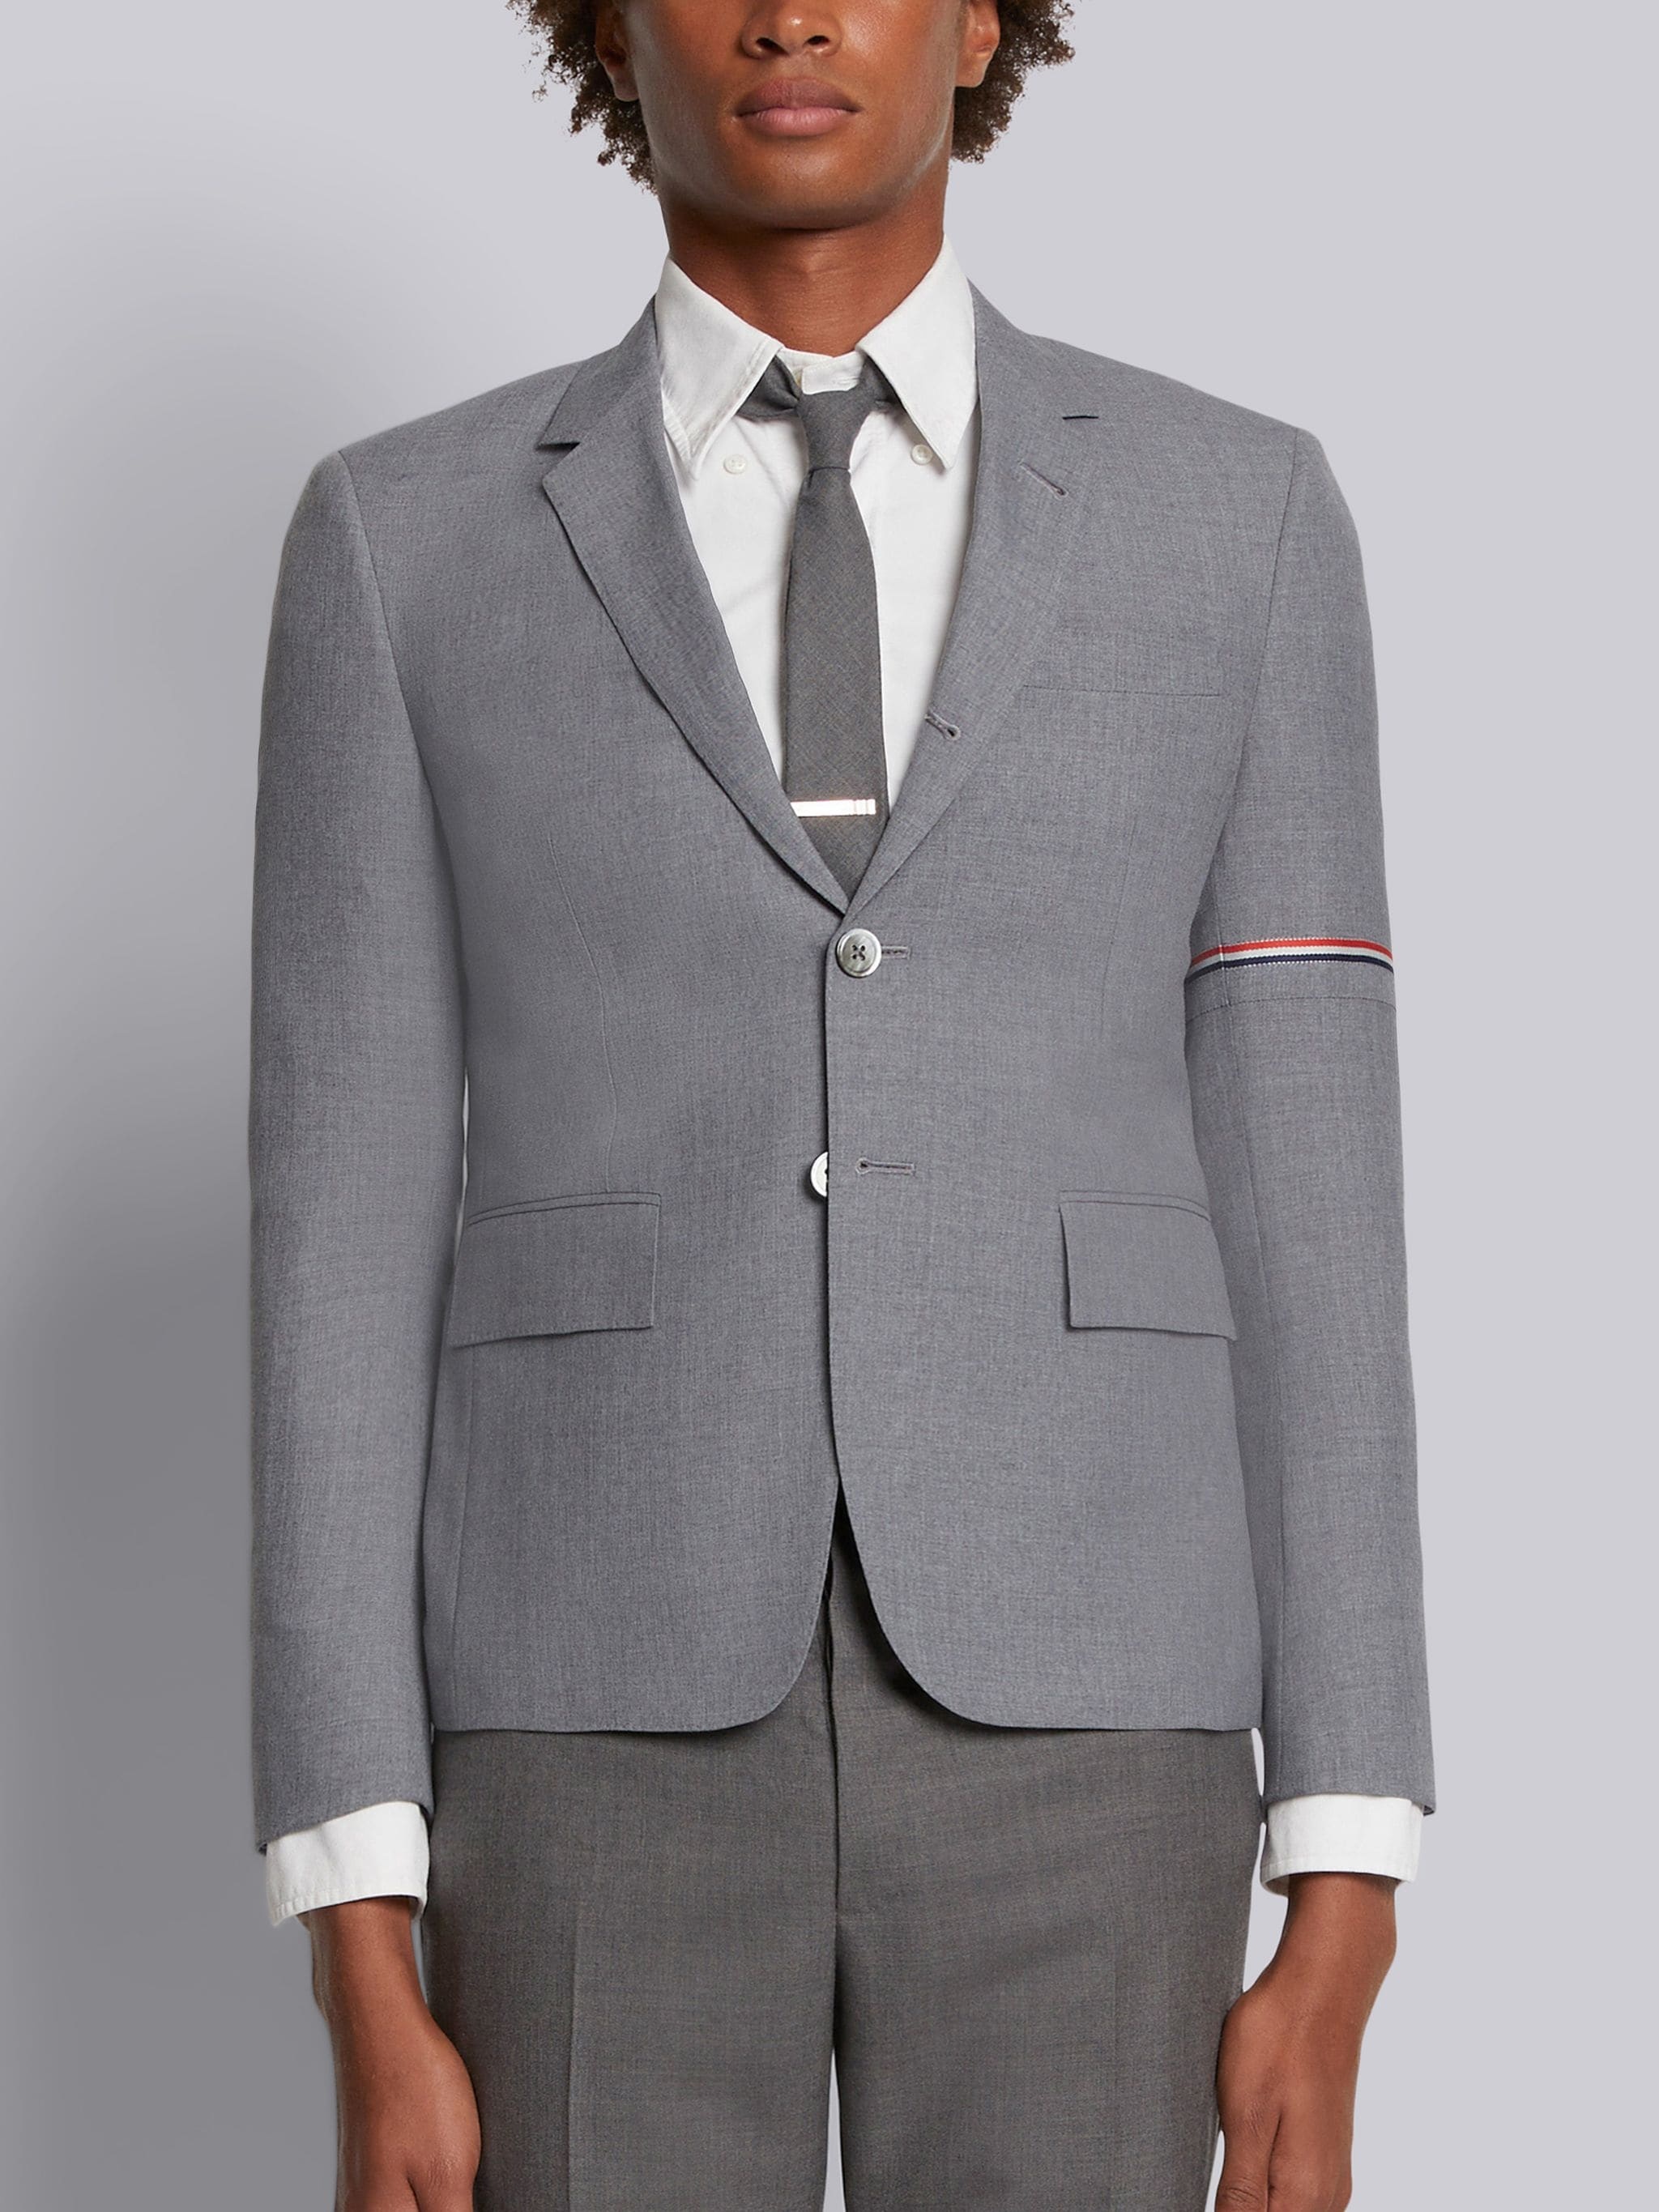 Medium Grey School Uniform Plain Weave Selvedge Armband Jacket - 1